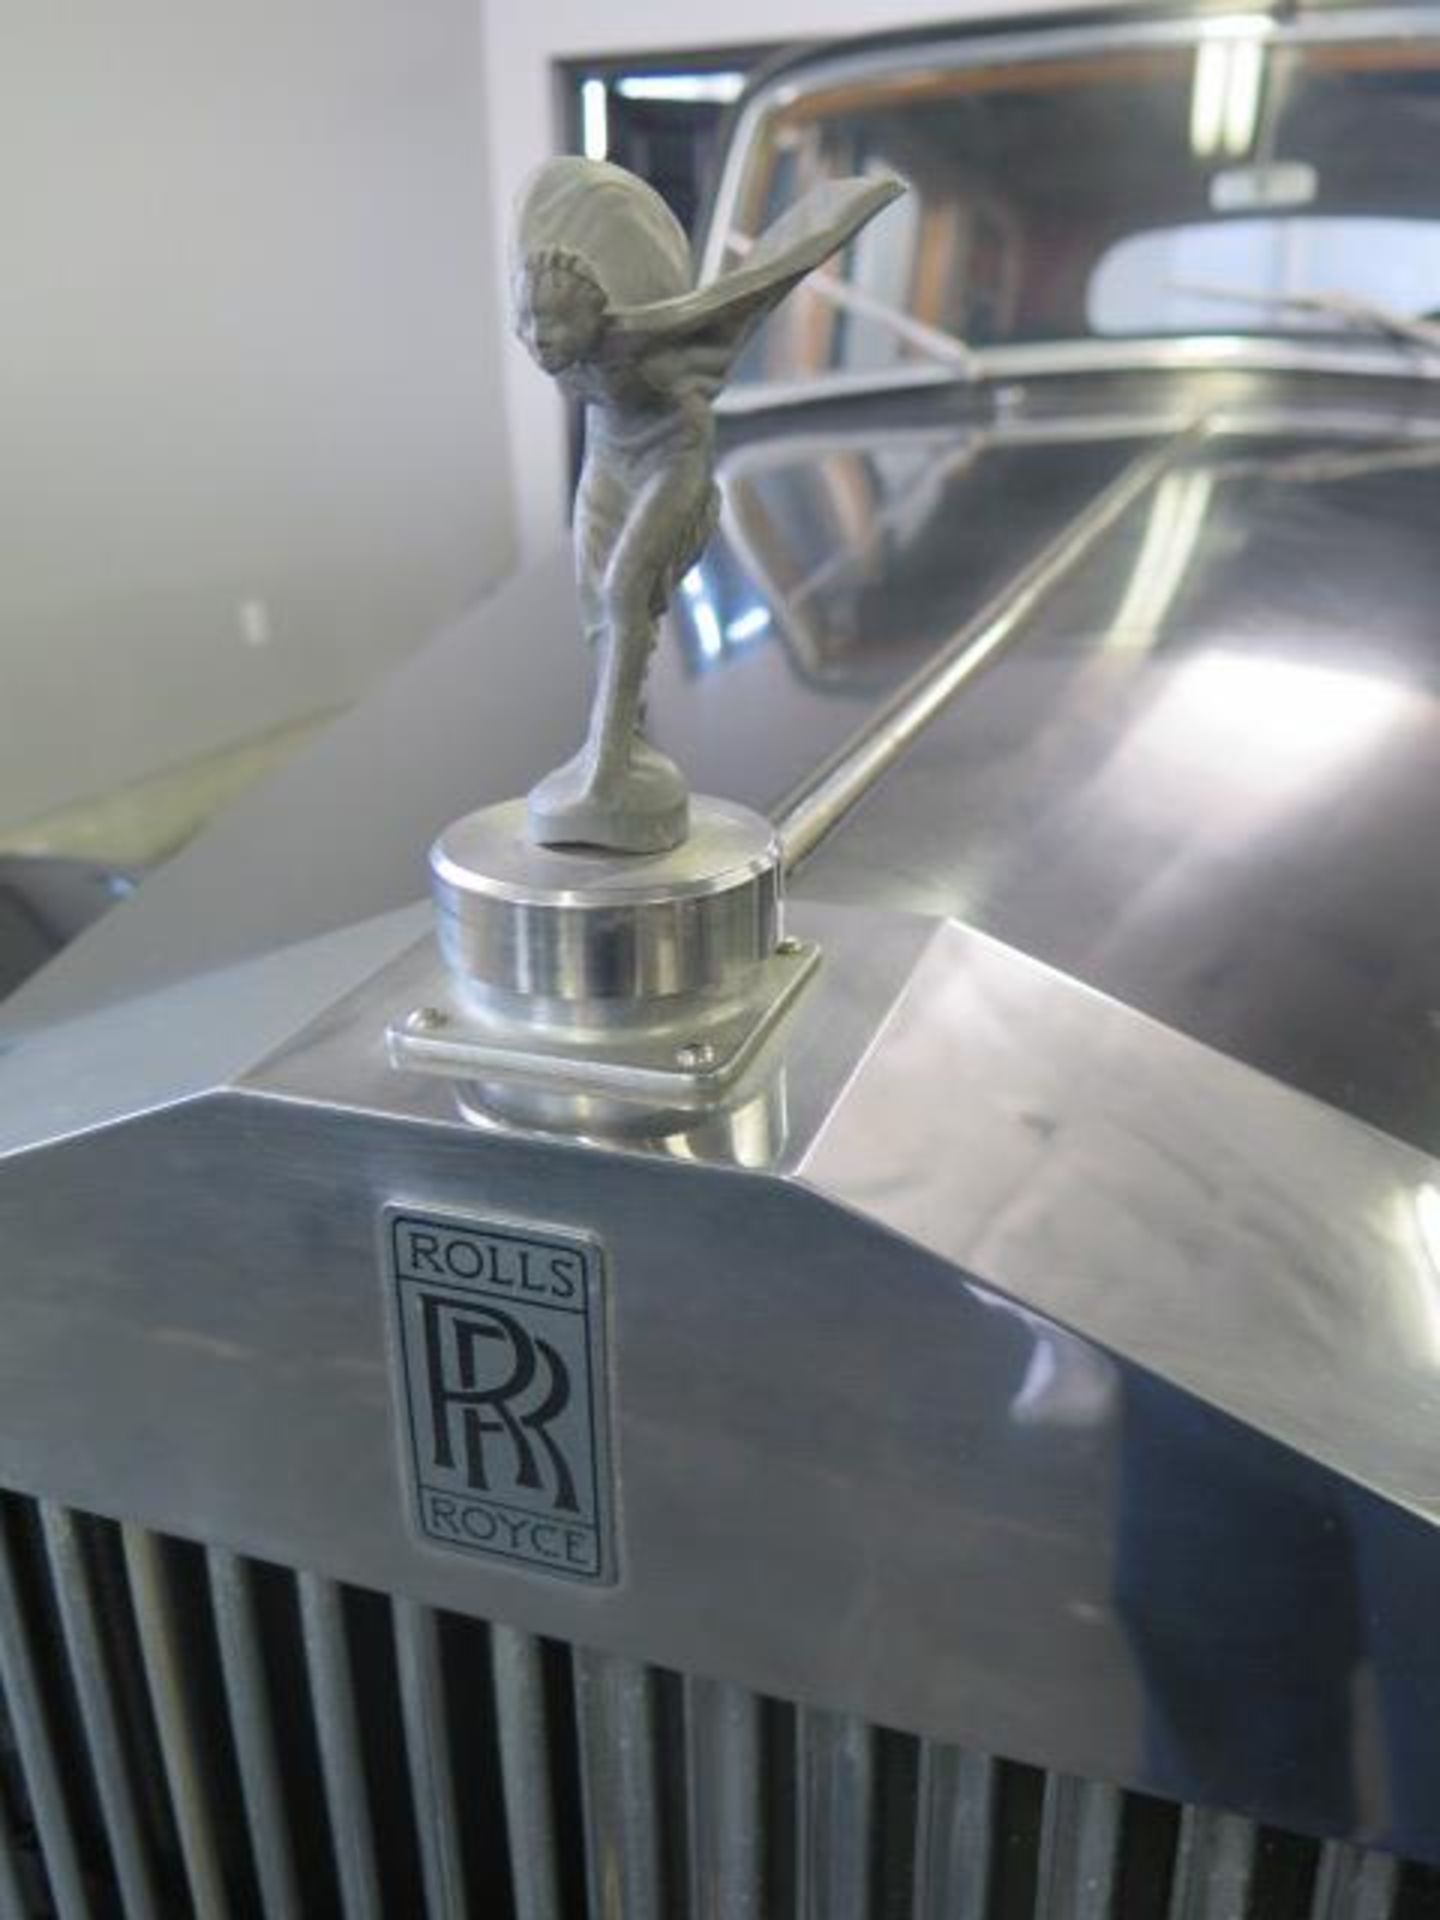 1952 Rolls Royce Silver Dawn Sedan Lics# 2DXP115 w/ Left Hand Steering, Gas, s/n S-78-C, SOLD AS IS - Image 4 of 38